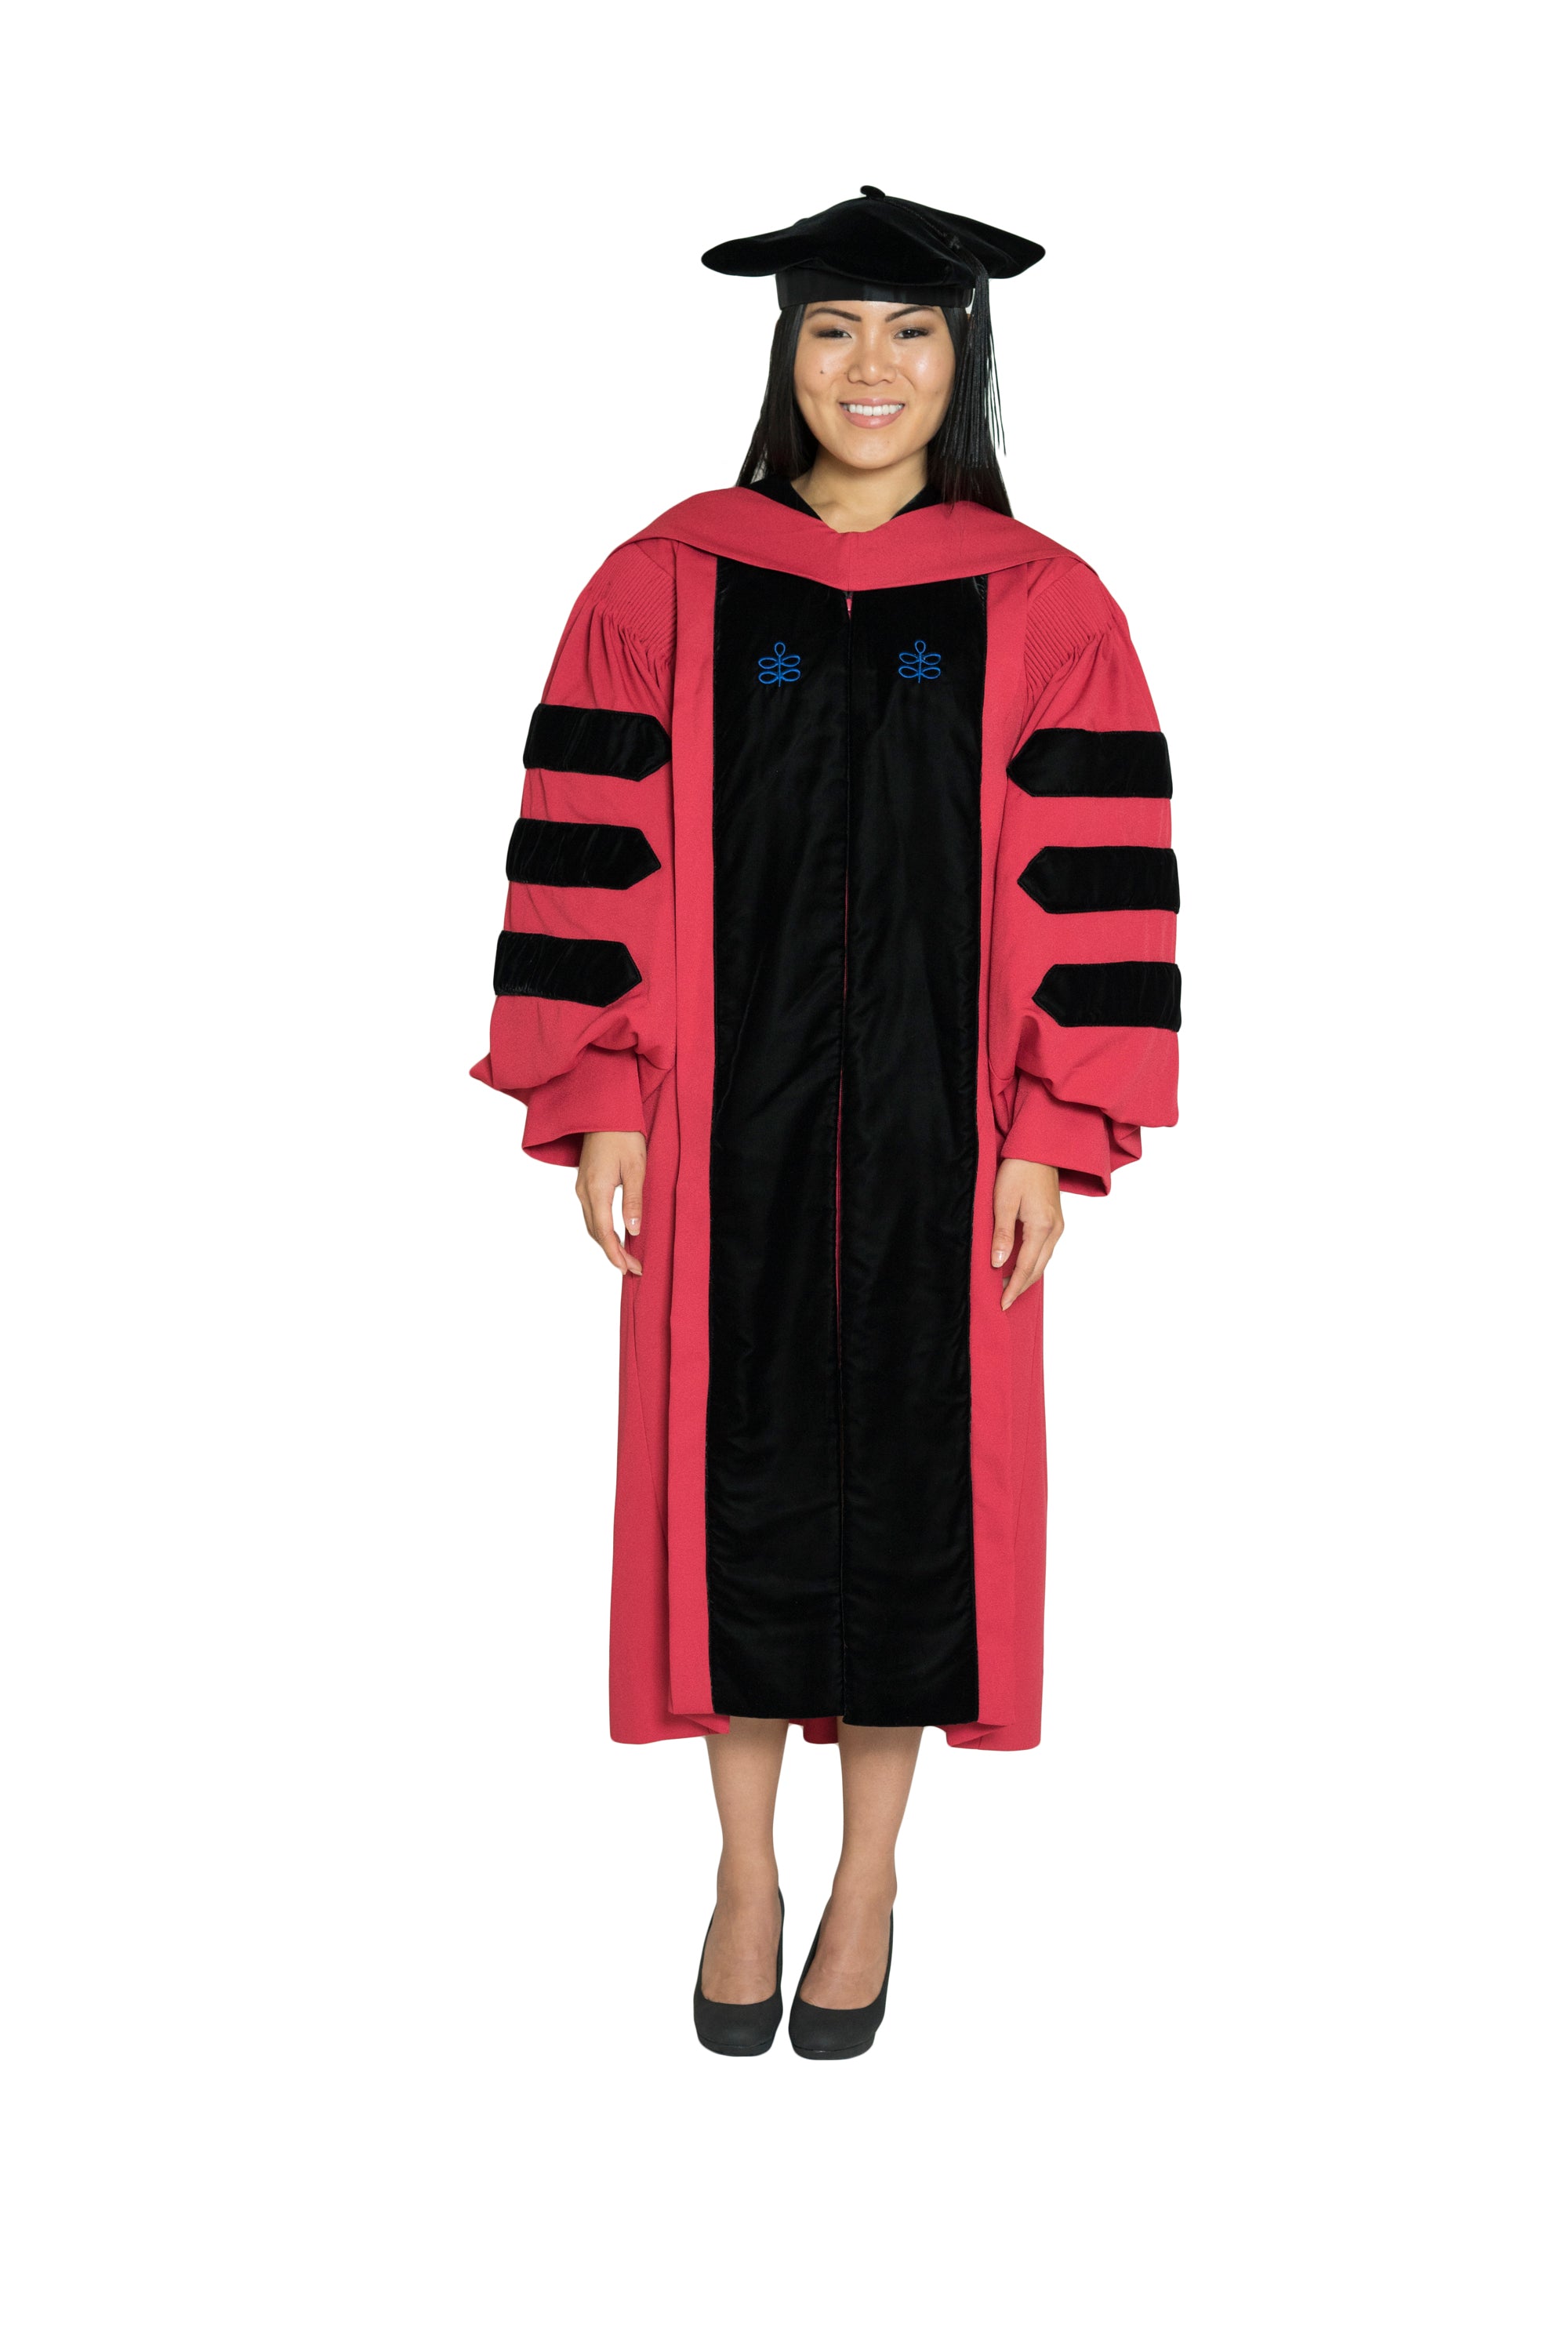 Graduation Gowns - Kapri Company